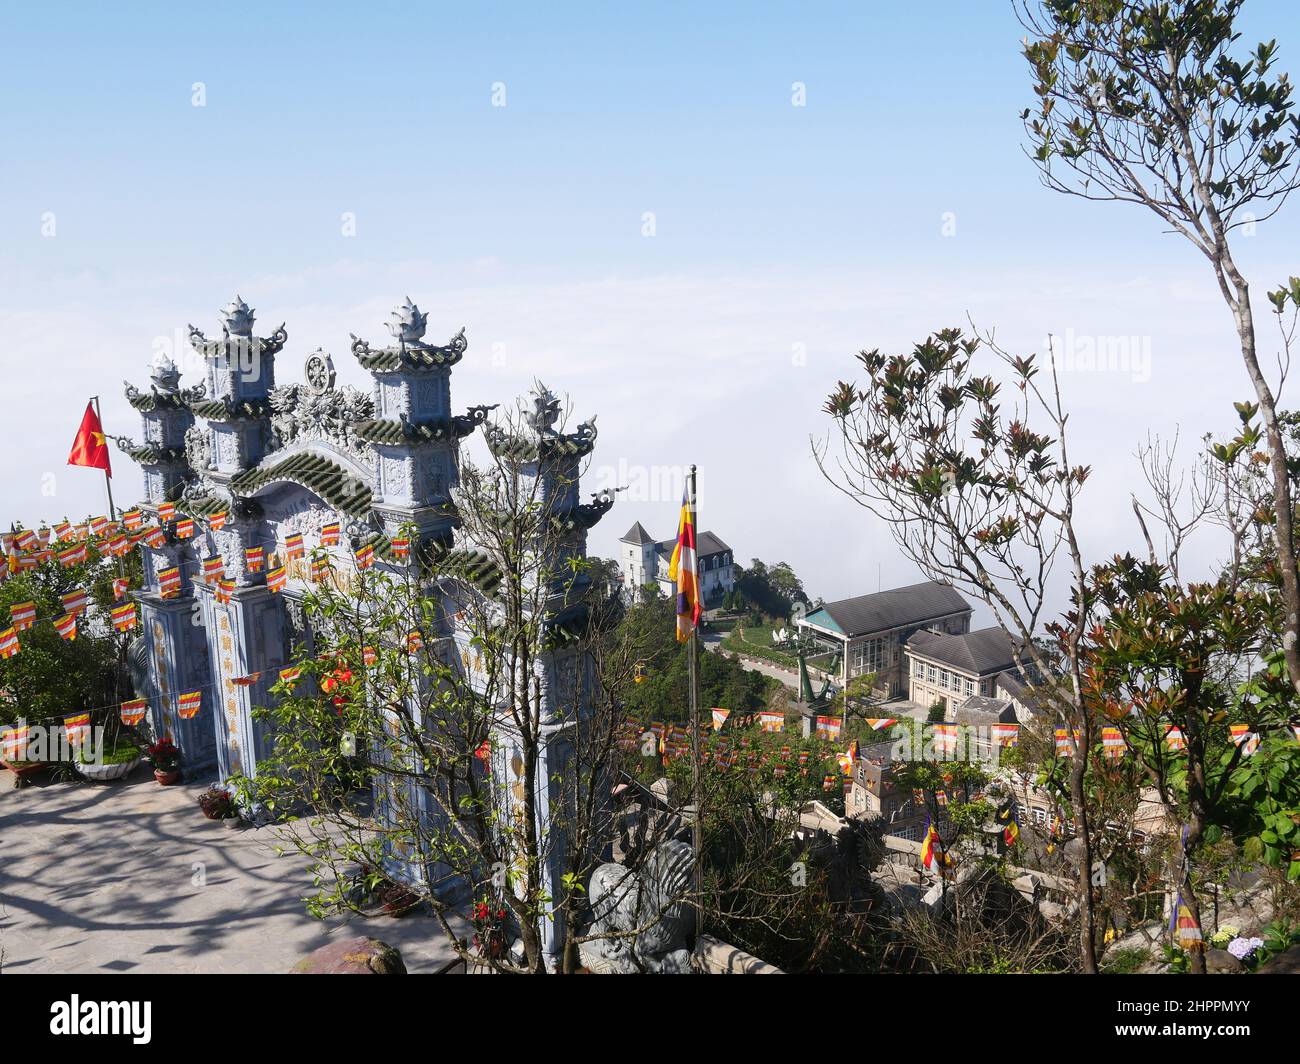 Da Nang, Vietnam - April 12, 2021: Linh Ung temple, Chua Linh Ung in Ba Na Stock Photo